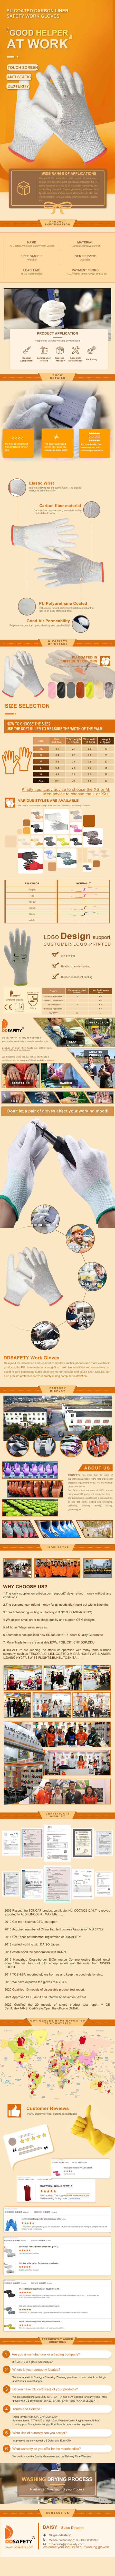 Lightweight Grip Gloves Carbon Fiber Touchscreen Tactical Gloves Ideal for General Duty Work  - DPU210 Lightweight Grip Gloves Carbon Fiber Touchscreen Tactical Gloves Ideal for General Duty Work  - DPU210 esd gloves,Anti-Static Gloves,Lightweight Grip Gloves,Carbon Fiber Touchscreen Gloves